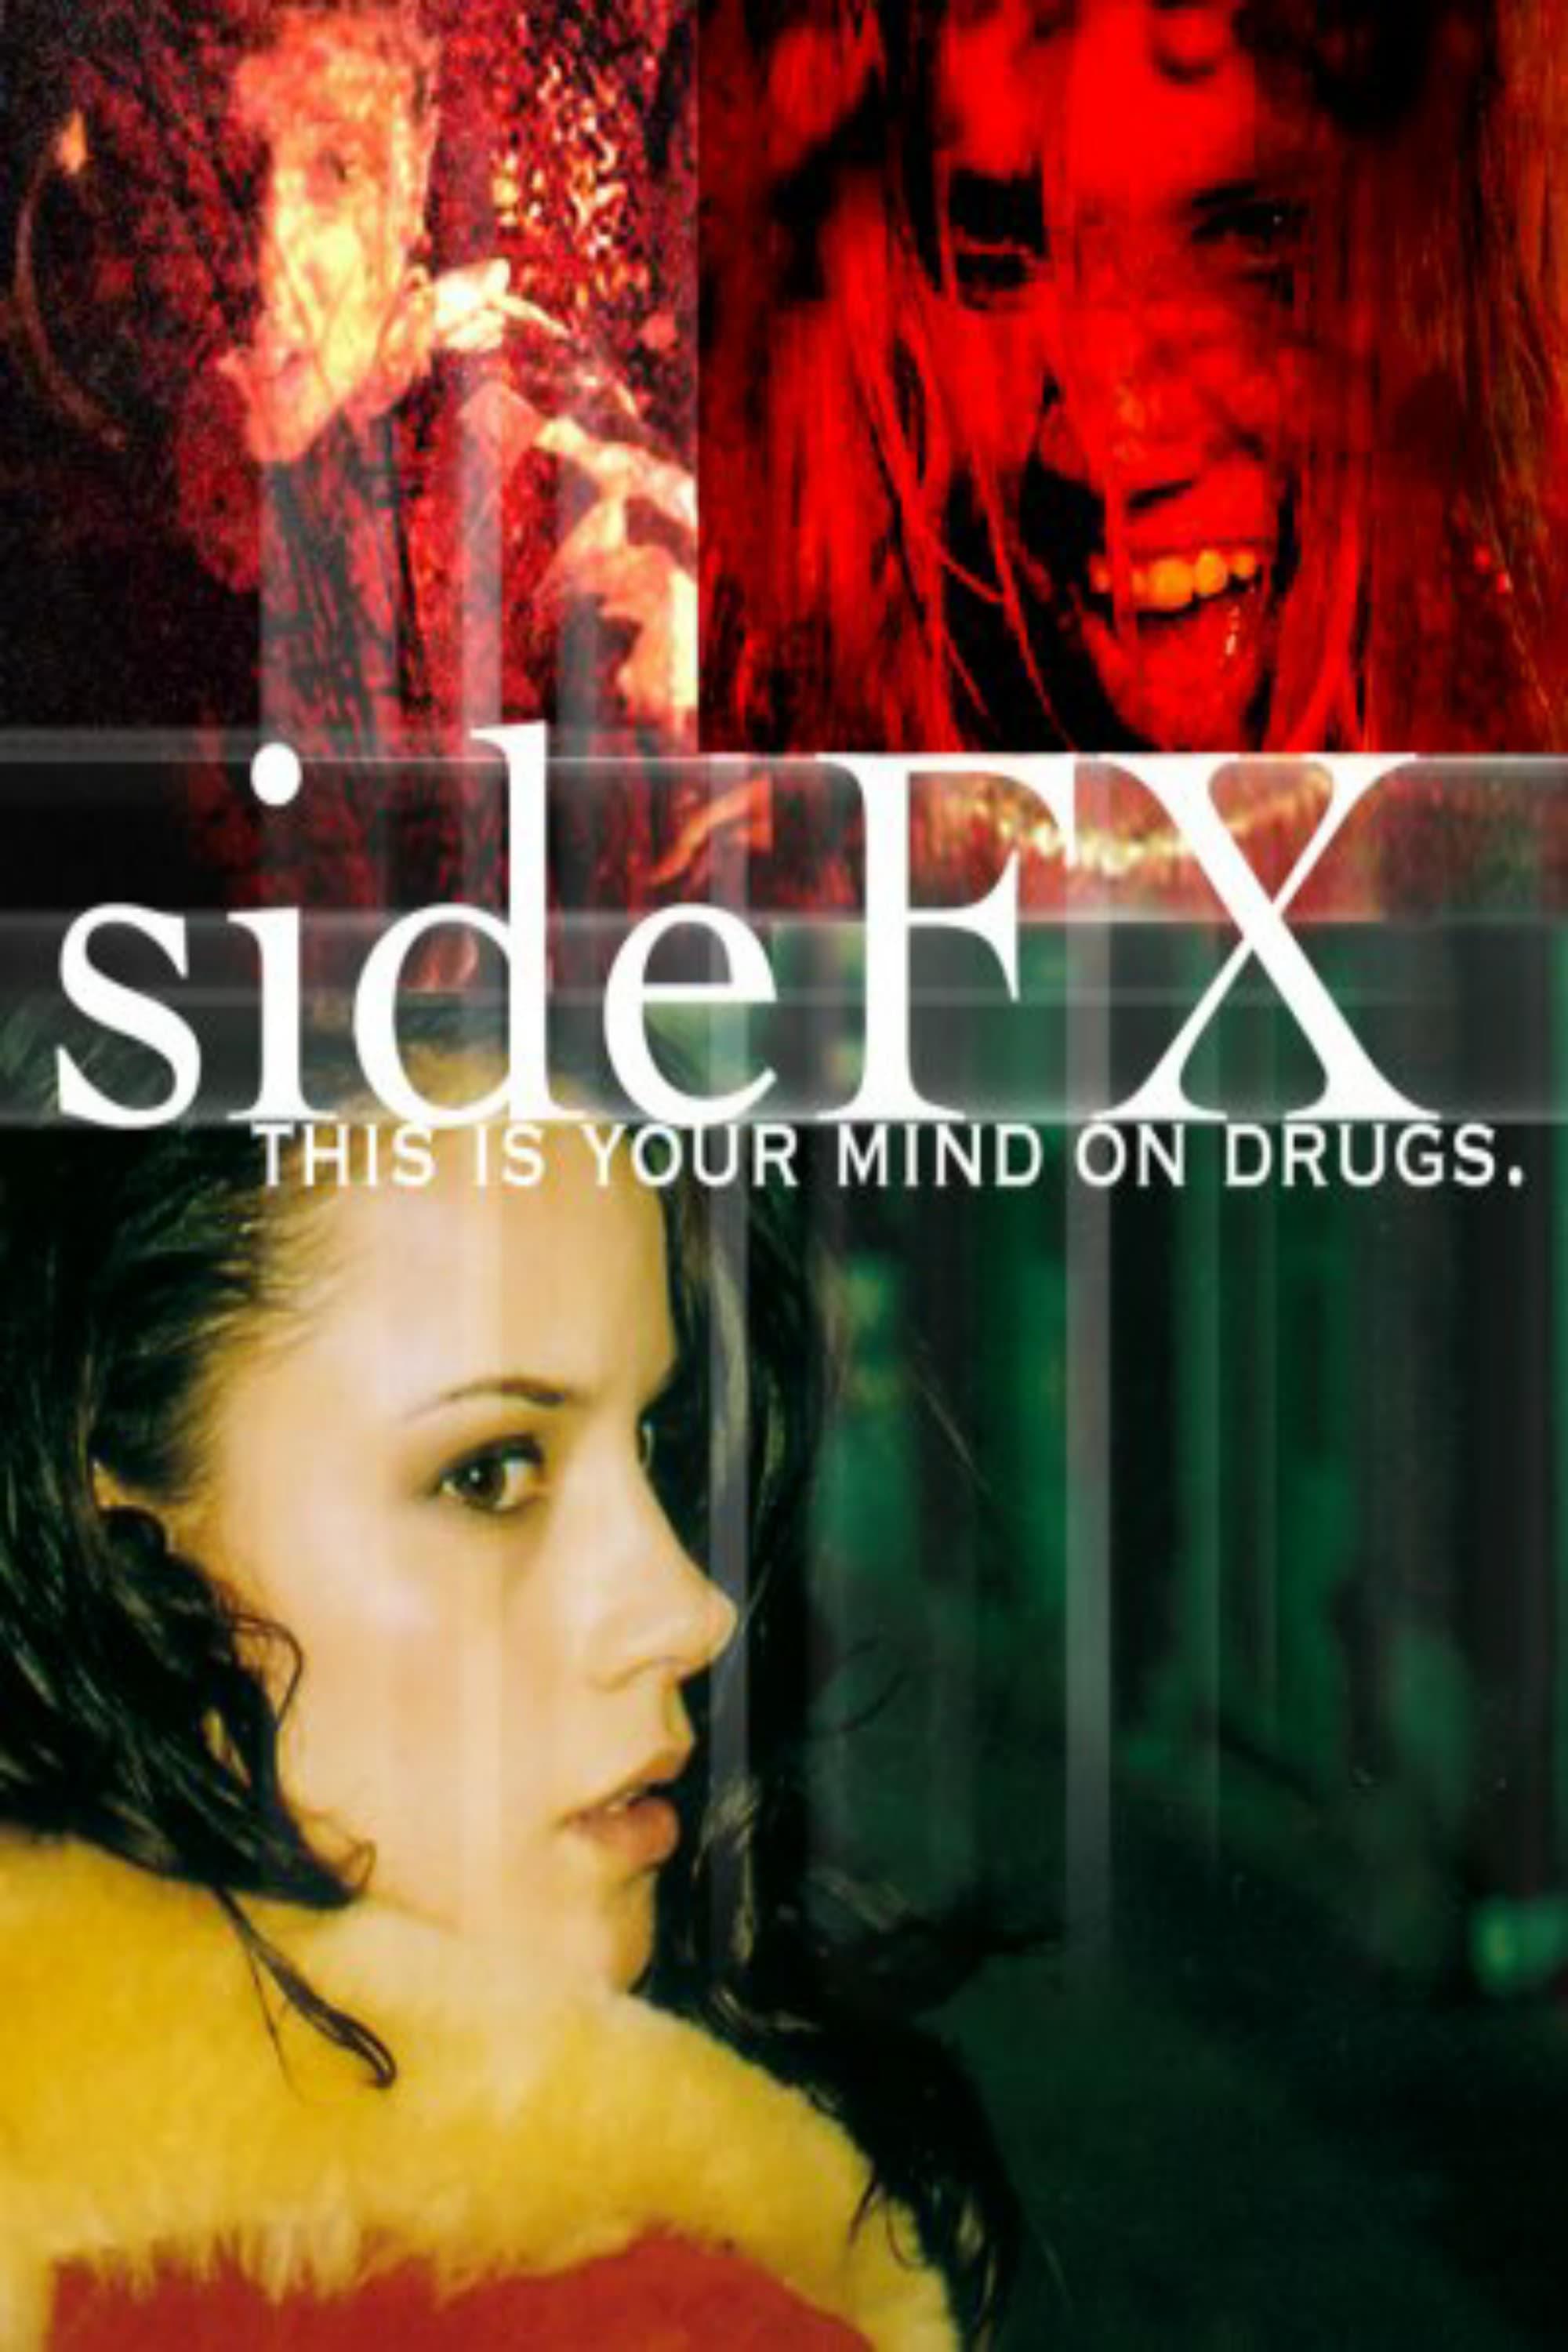 sideFX poster